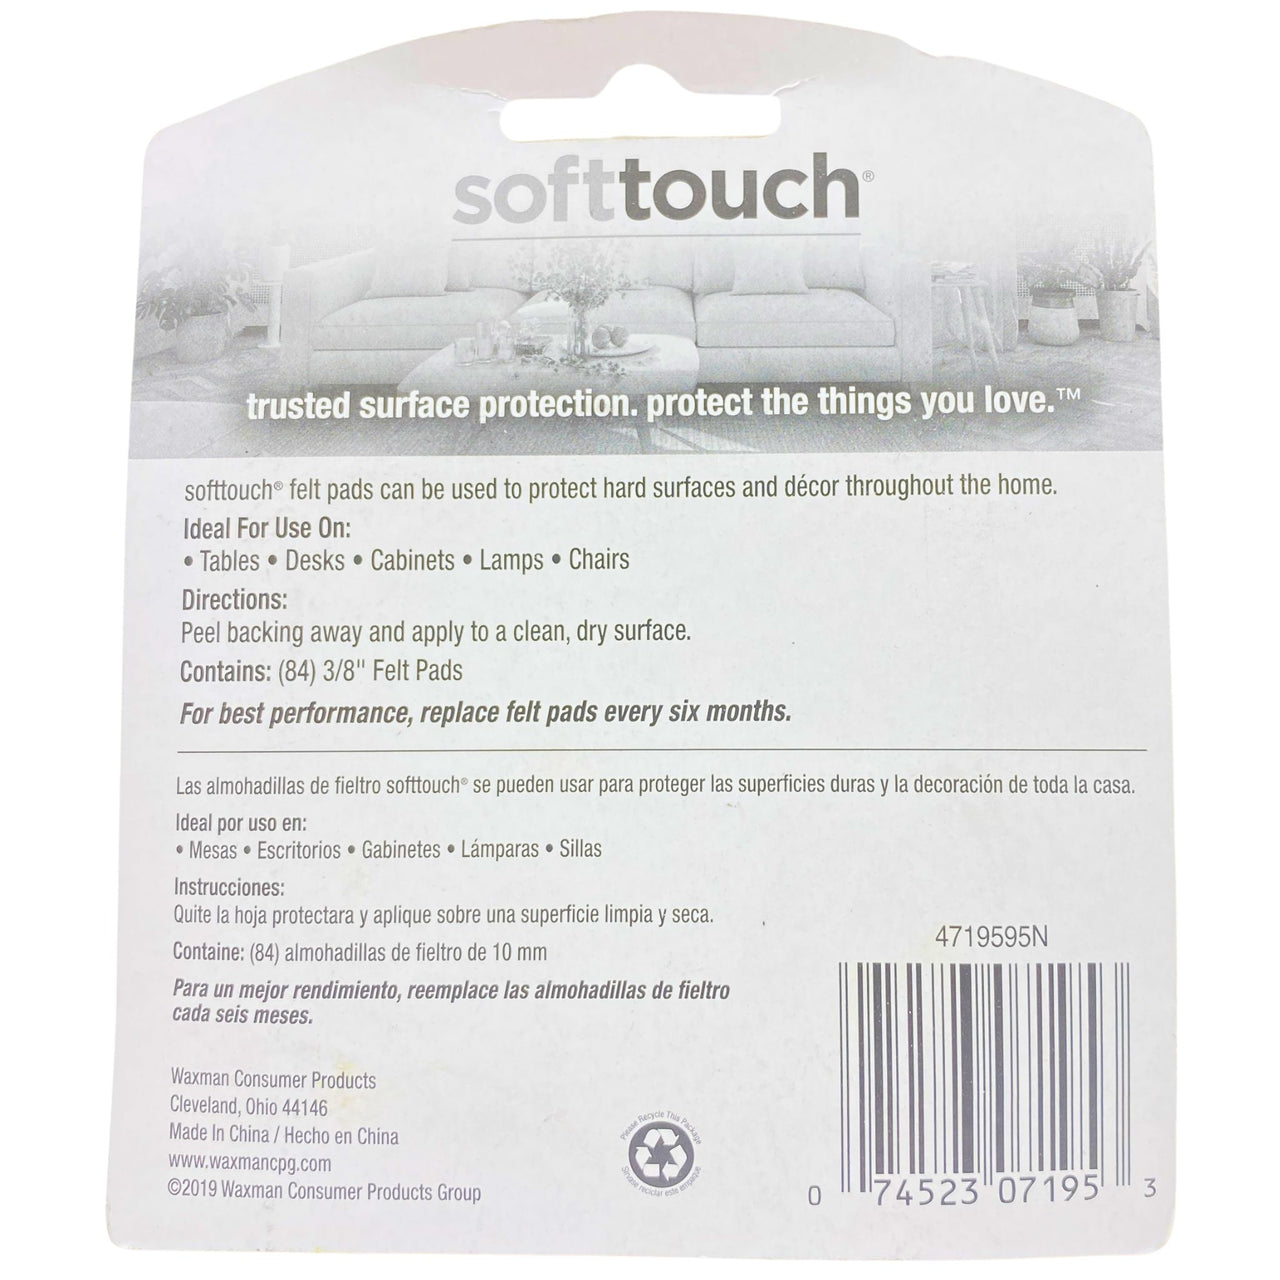 Soft Touch Felt Pads 84 self Stick Pieces 3/8" Premium Surface Protection 